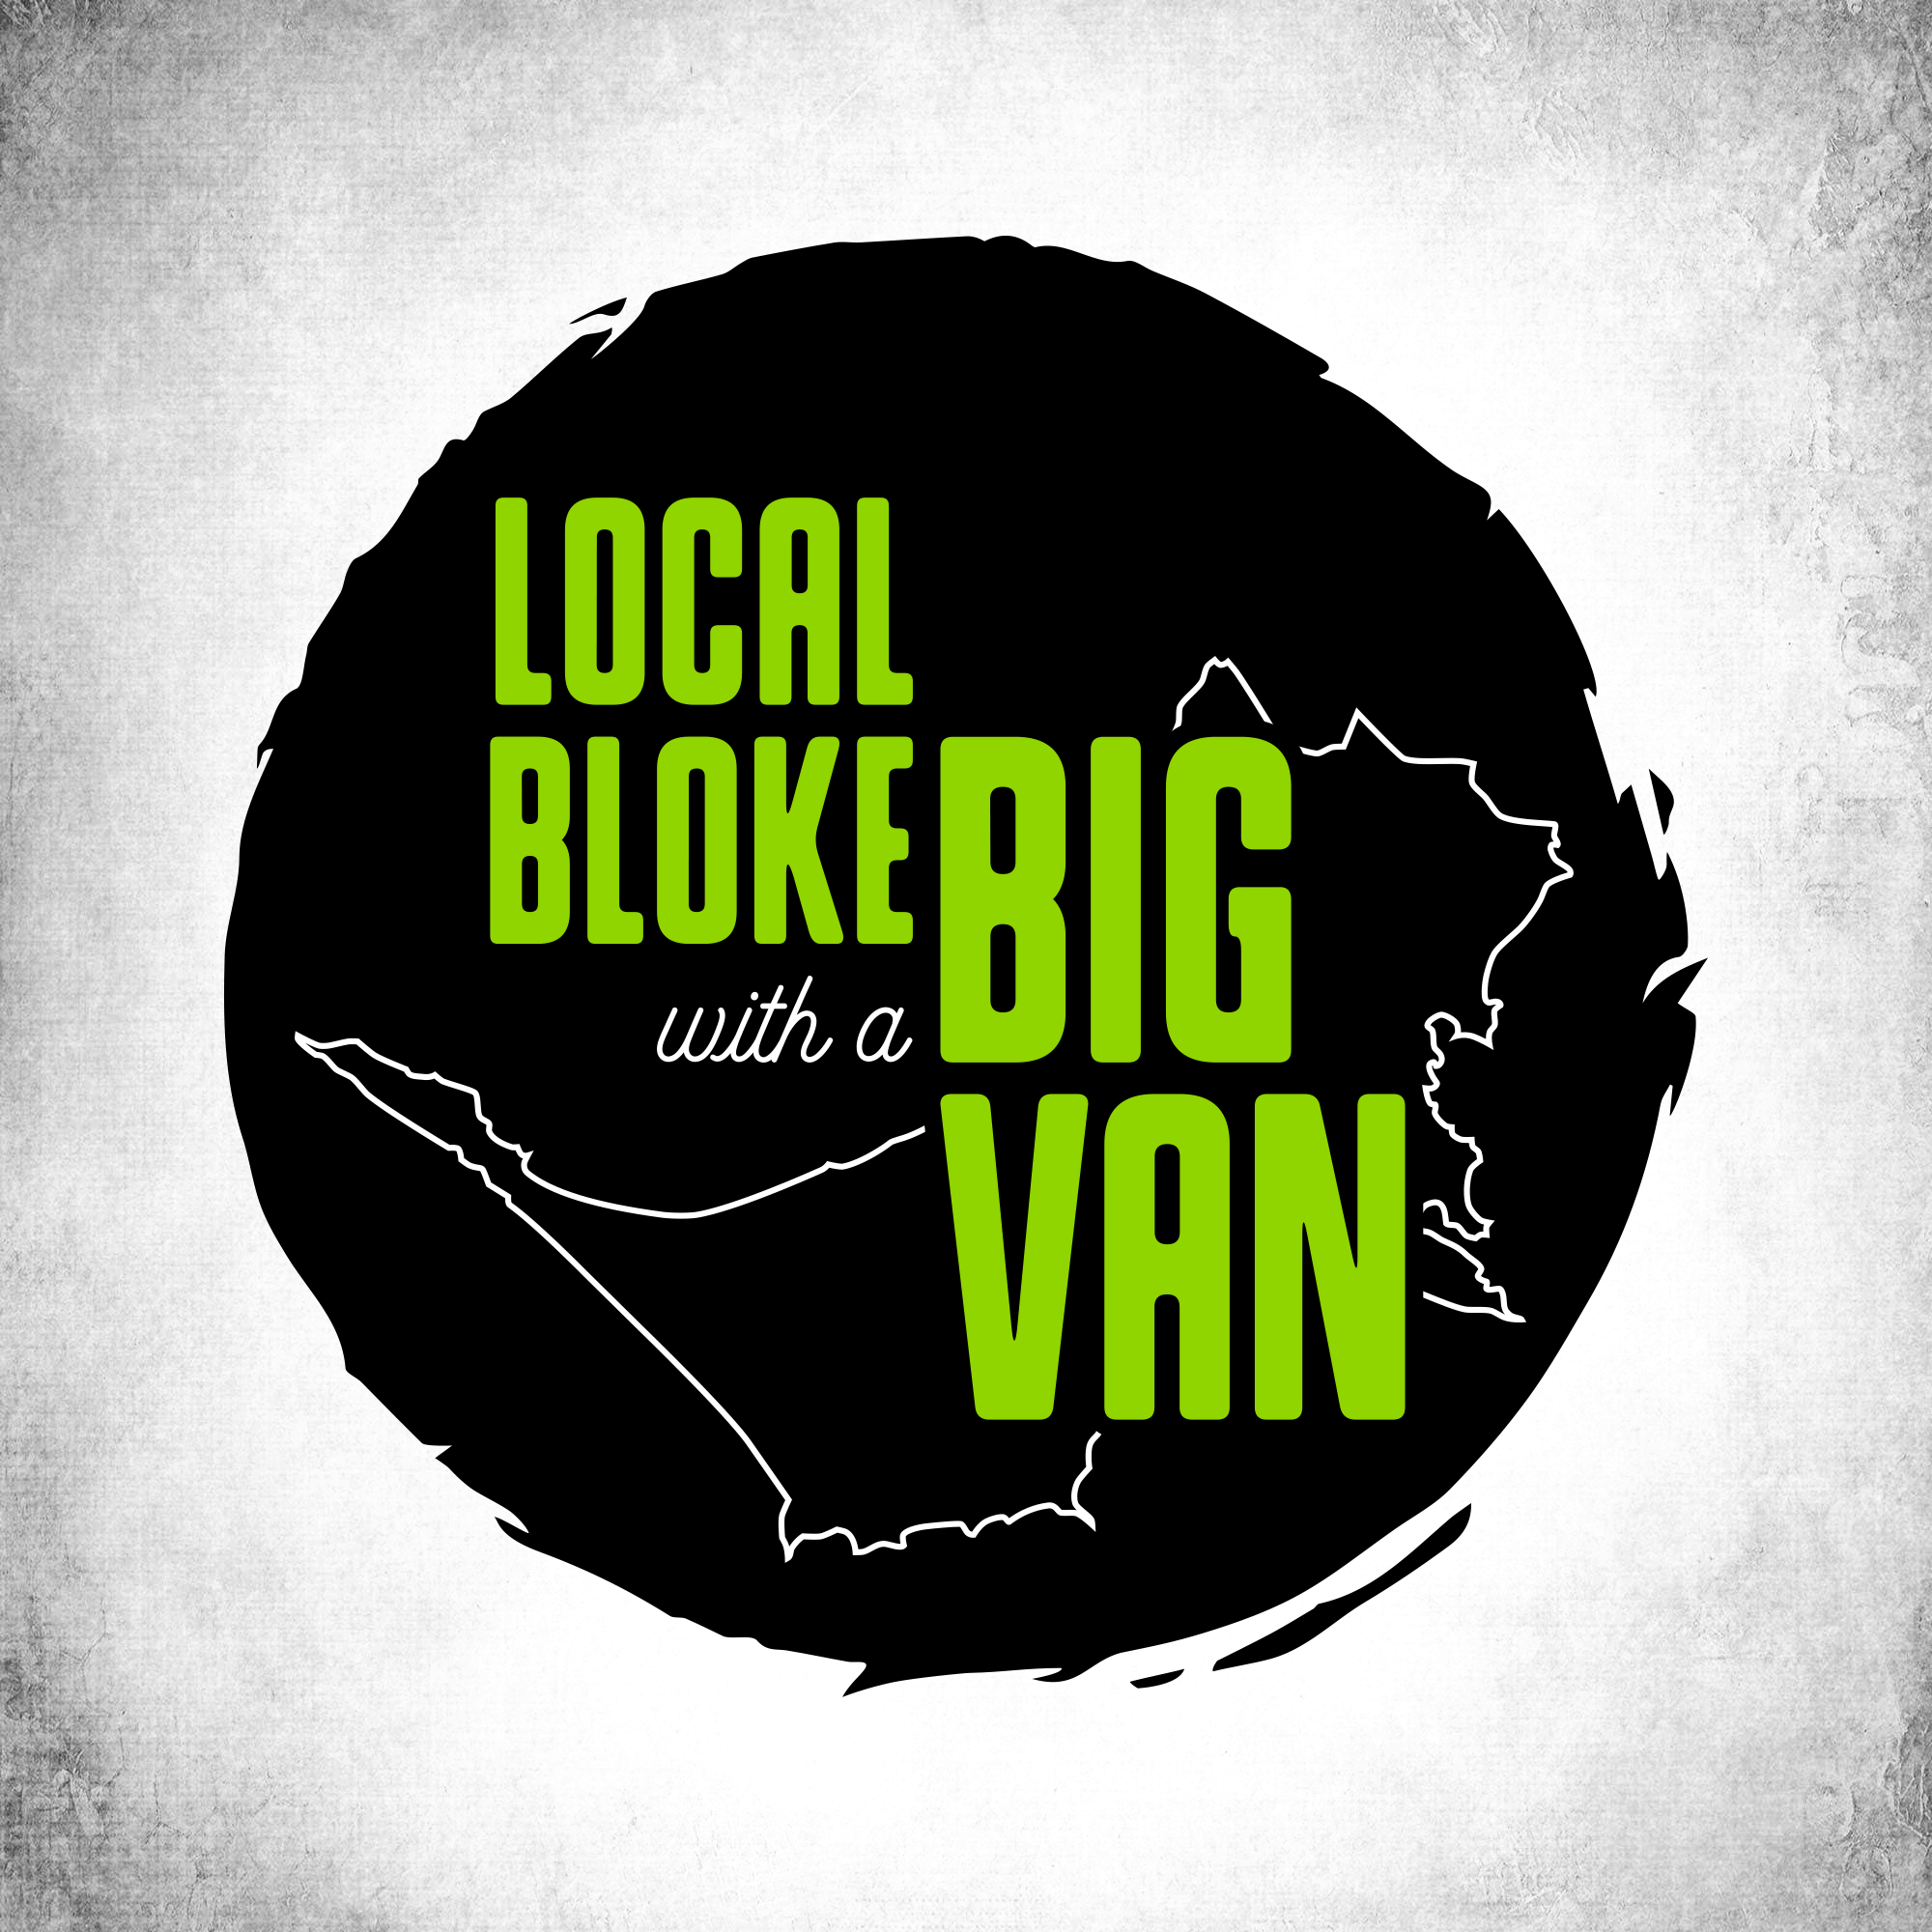 LocalBloke_Instagram_LogoPresentation6_1.png